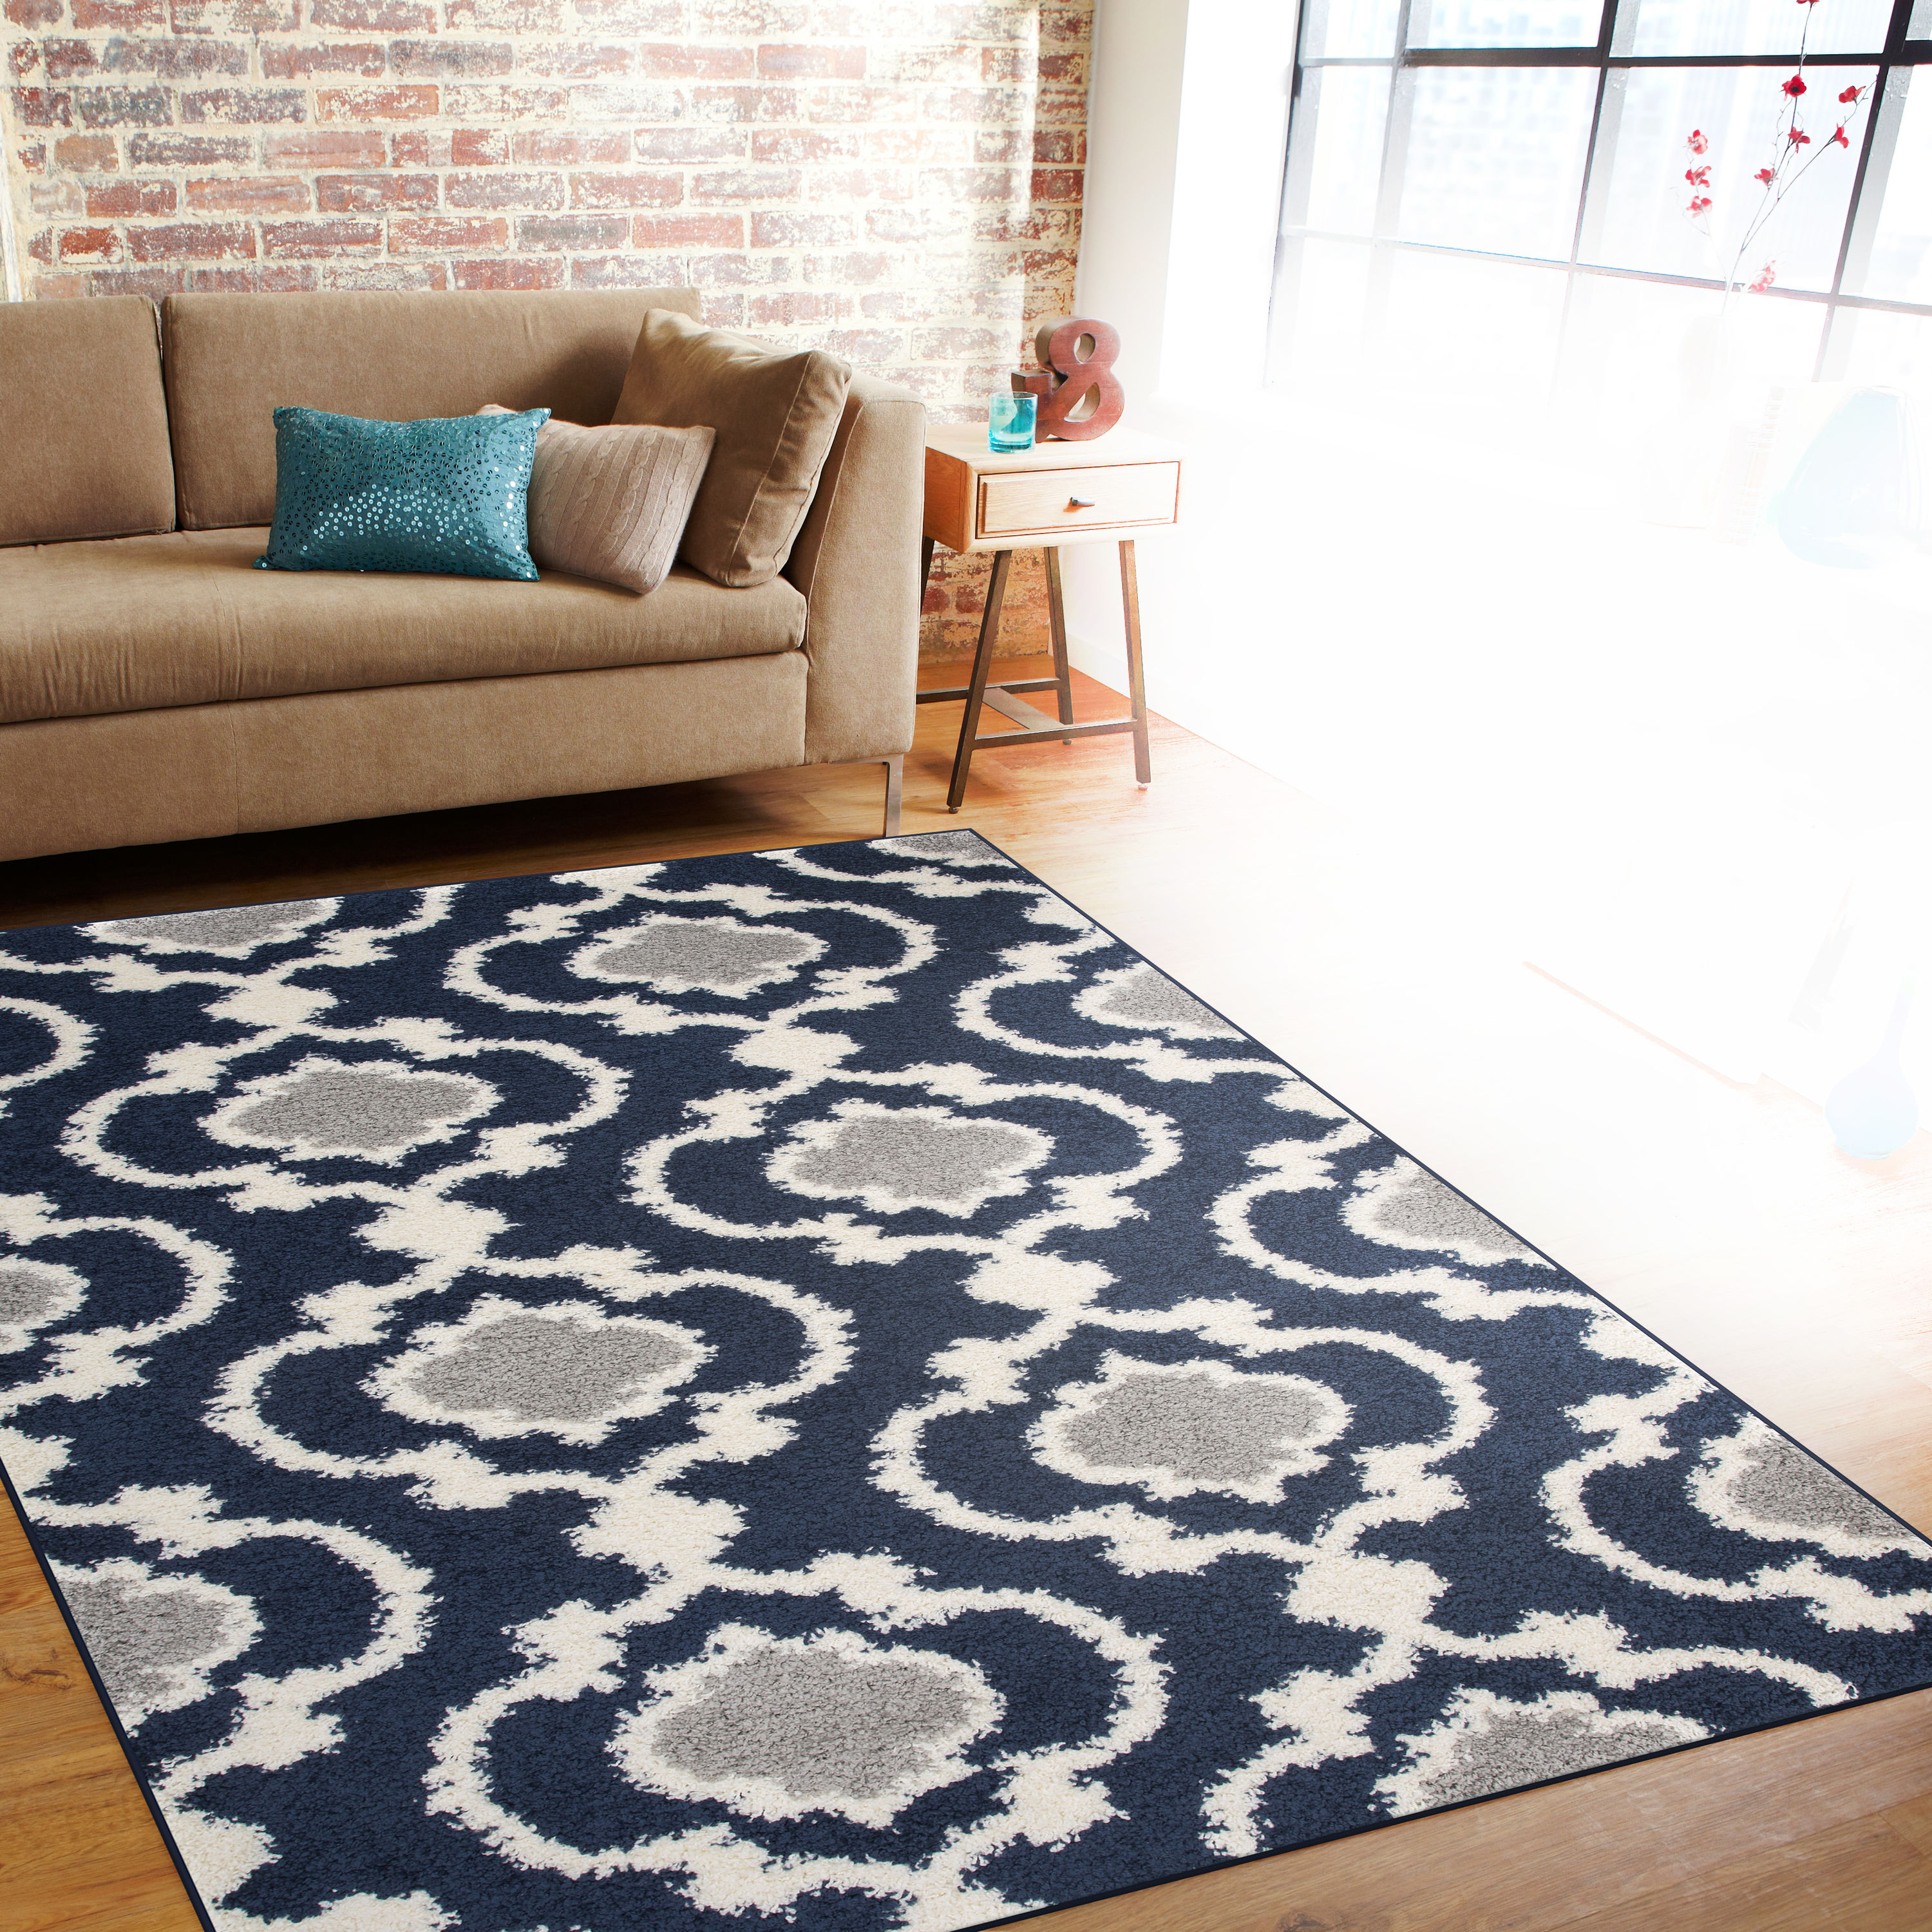  ITSOFT Non Slip Area Rug Pad Carpet Underlay Mat on Hard Floor  Runner Extra Strong Grip, 6 x 9 Feet : Home & Kitchen